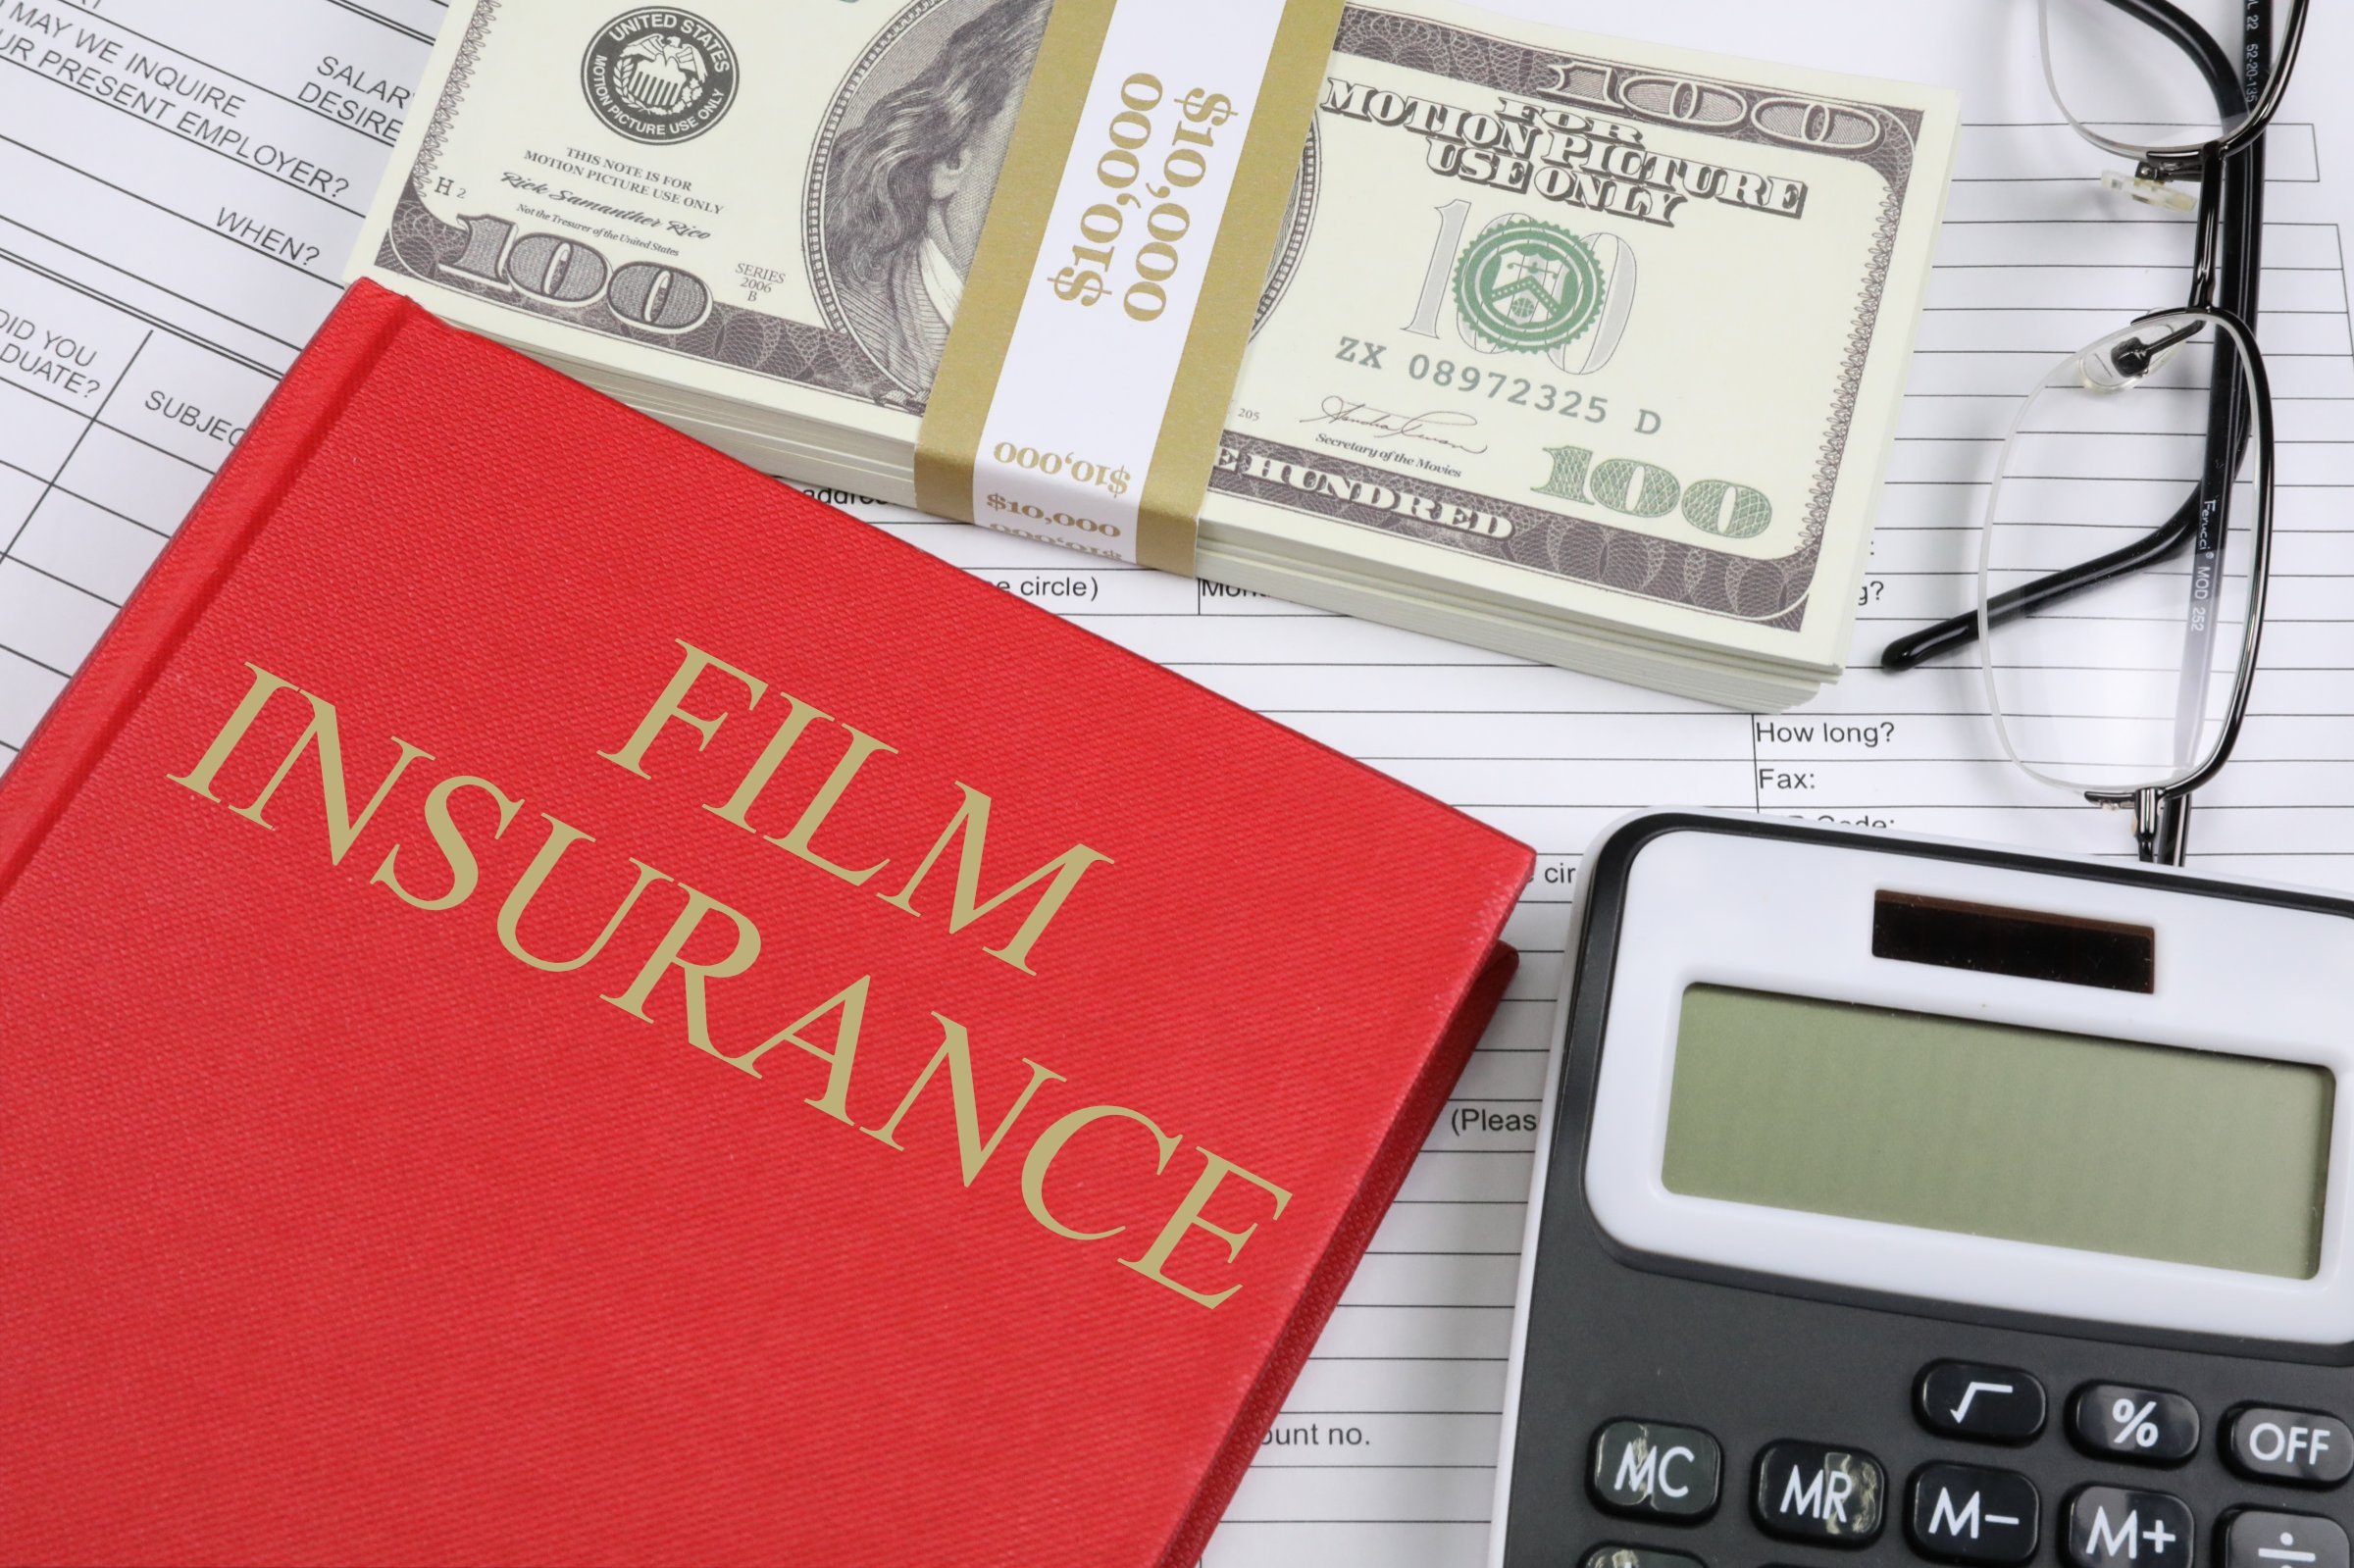 film insurance